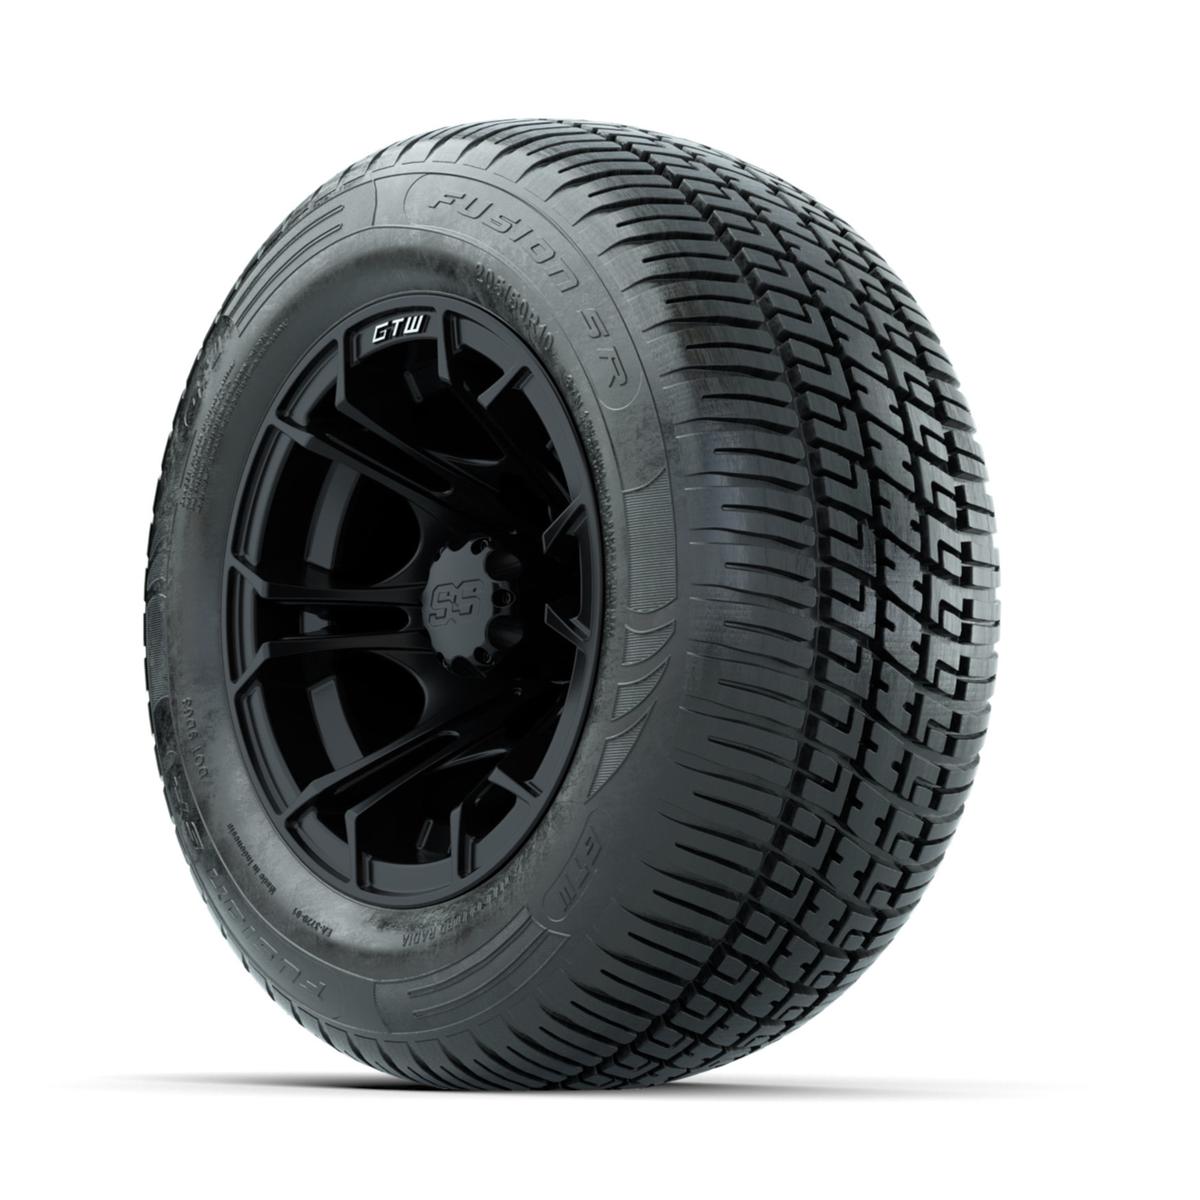 GTW Spyder Matte Black 10 in Wheels with 205/50-10 Fusion SR Steel Belted Radial Tires – Full Set